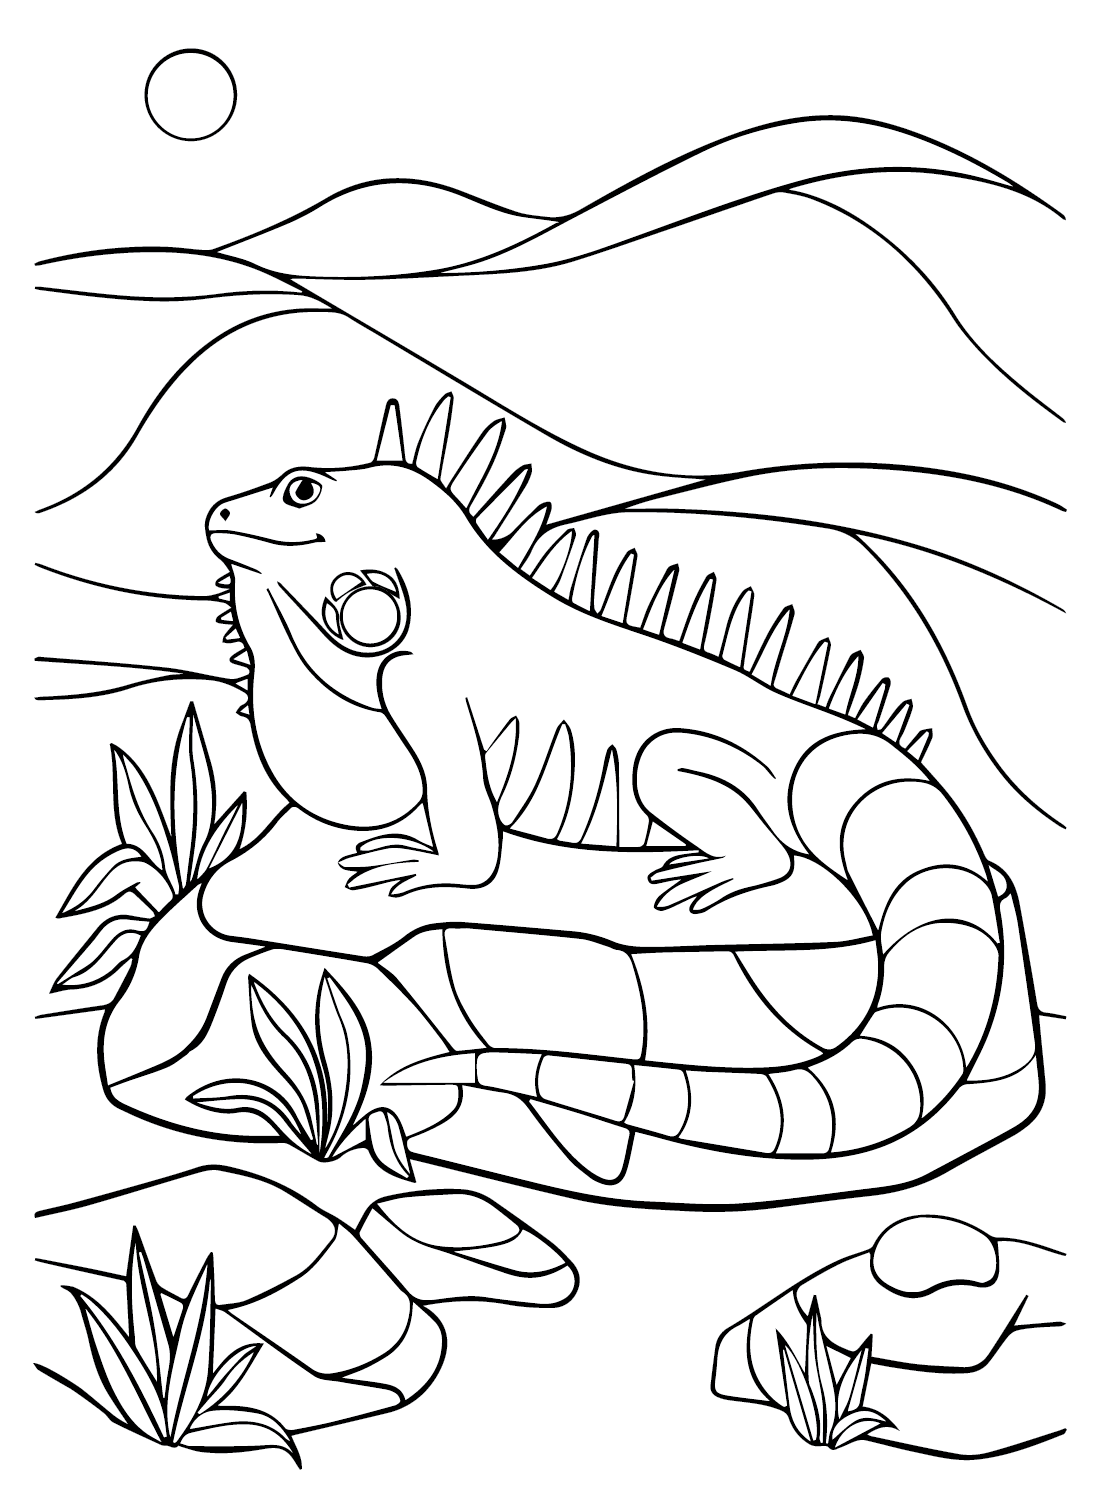 Cartoon Iguana Coloring Page from Iguana